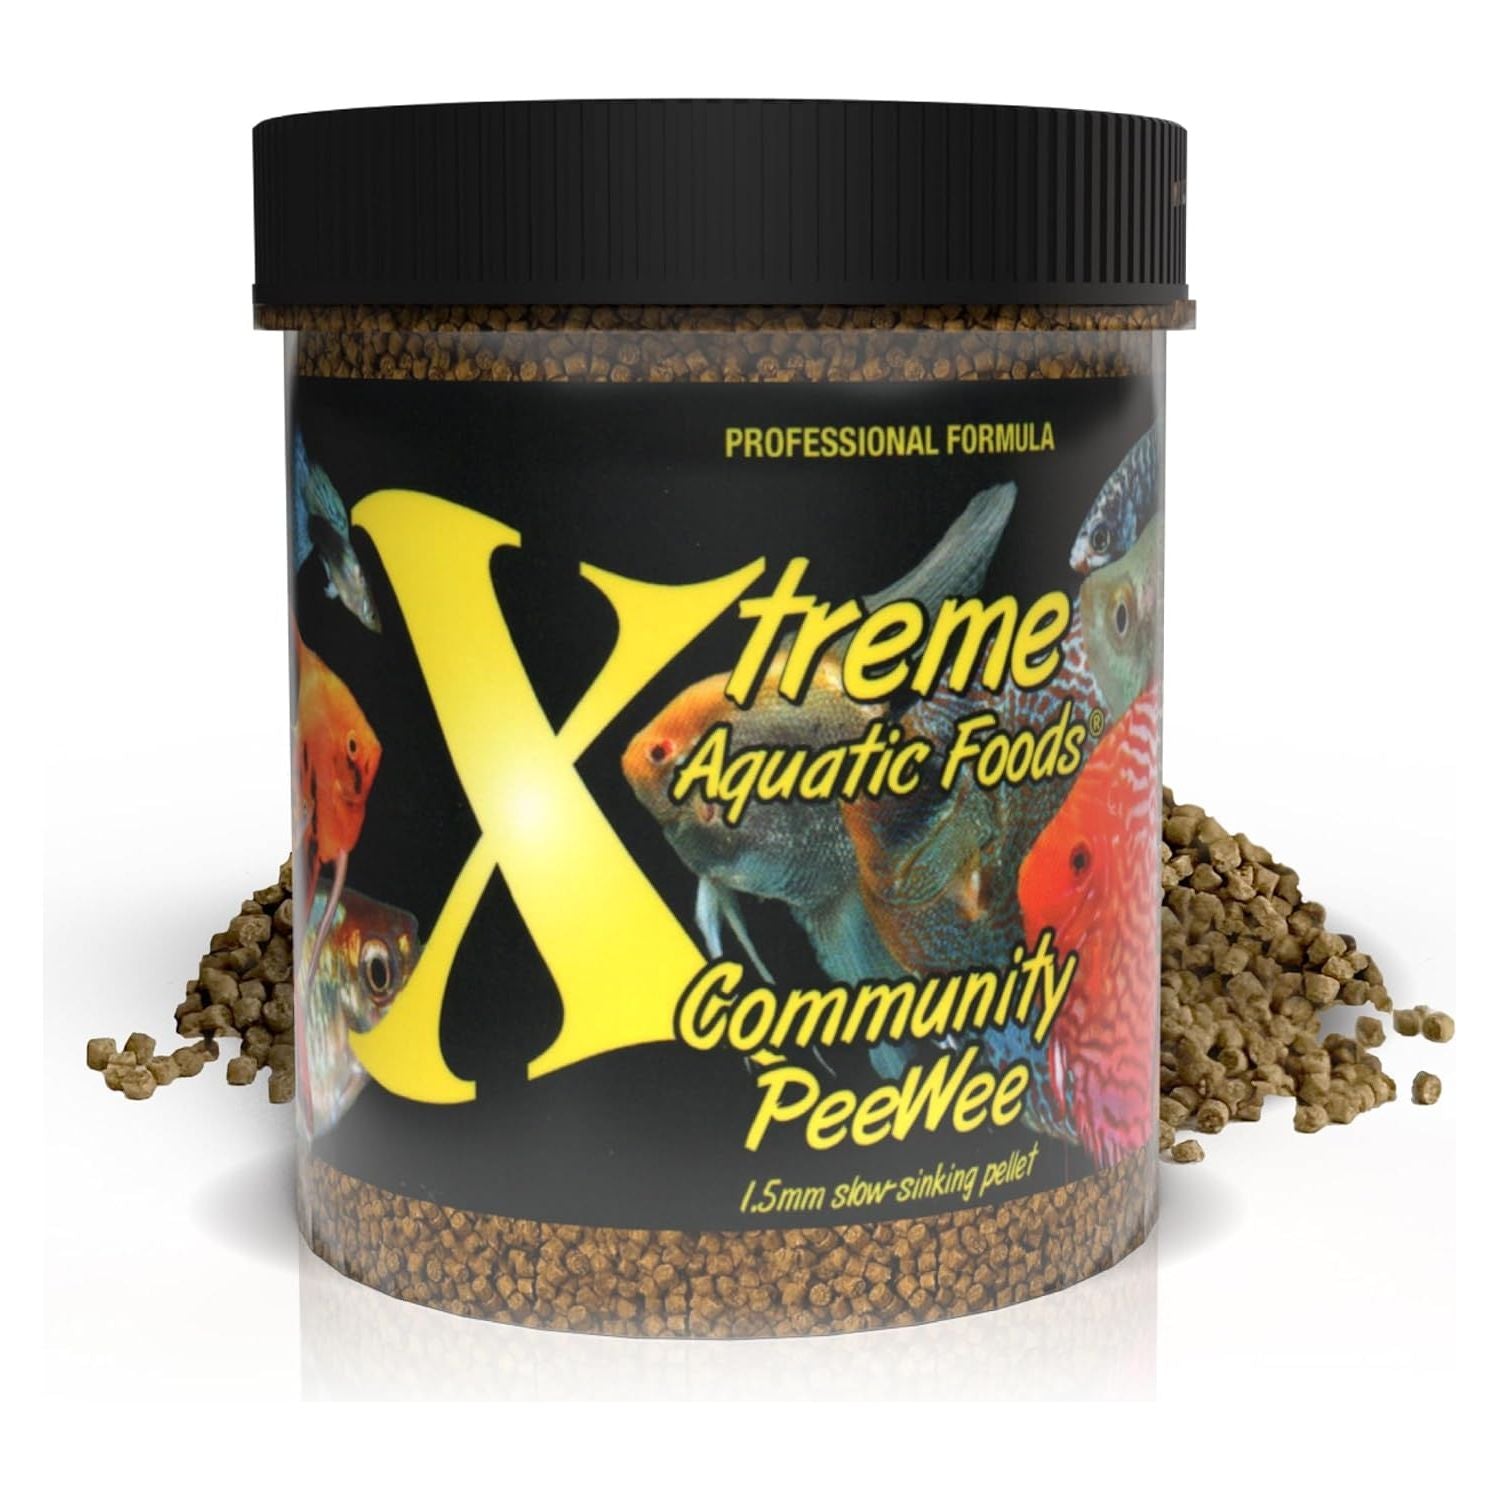 Xtreme Aquatic Foods Community PeeWee 1.5mm Slow-Sinking Pellets 10 oz (280g) 893427001282 Super Cichlids